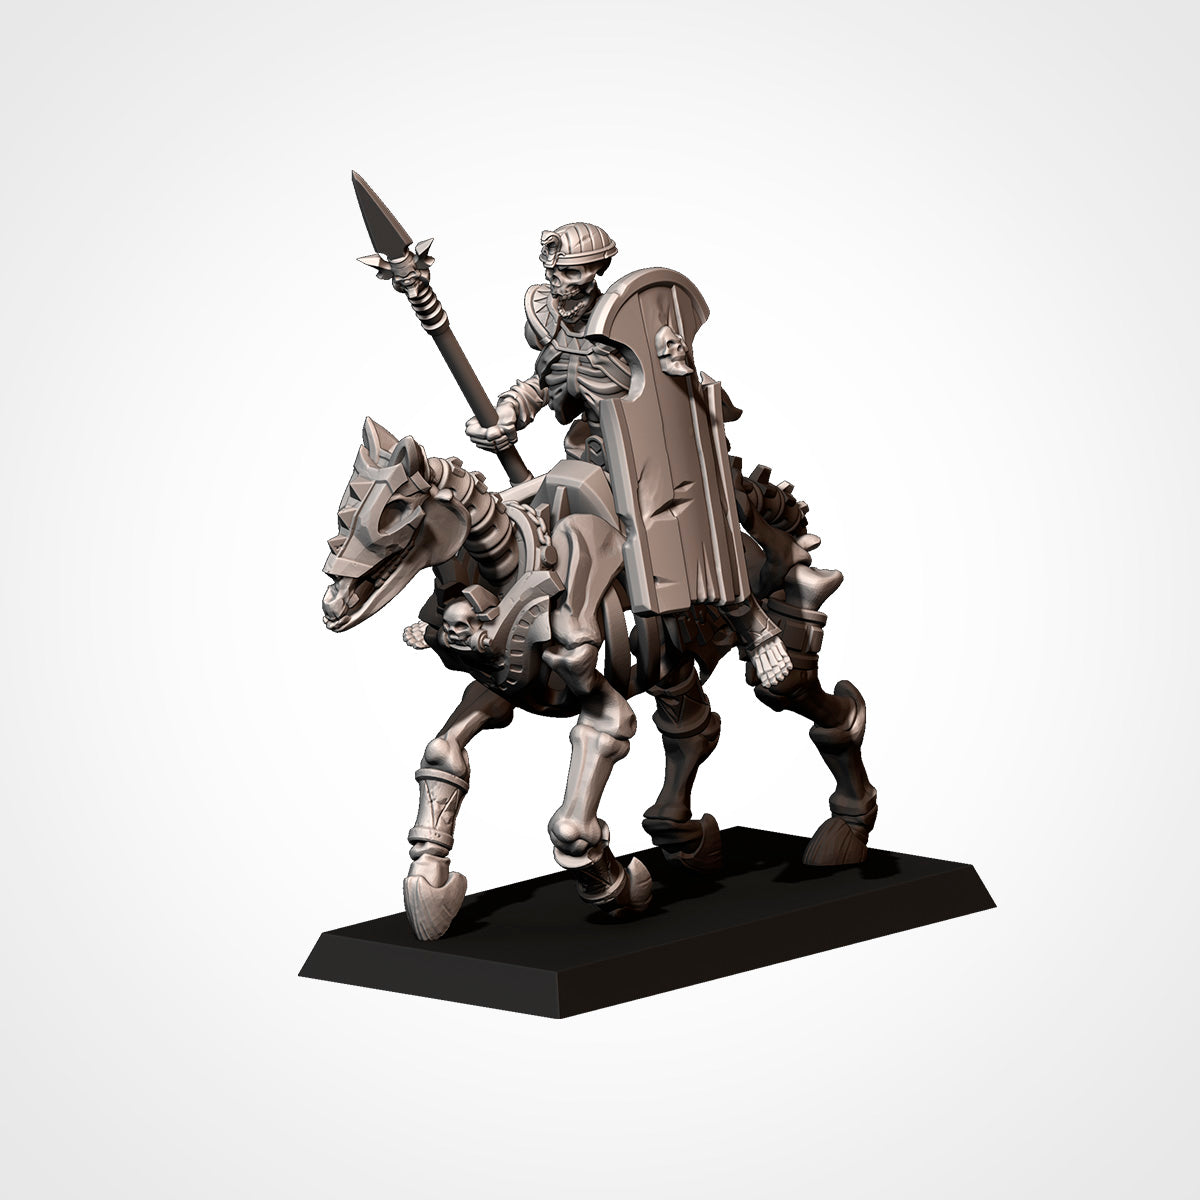 Skeletal Heavy Cavalry | Txarli Factory | Armies of the Sands